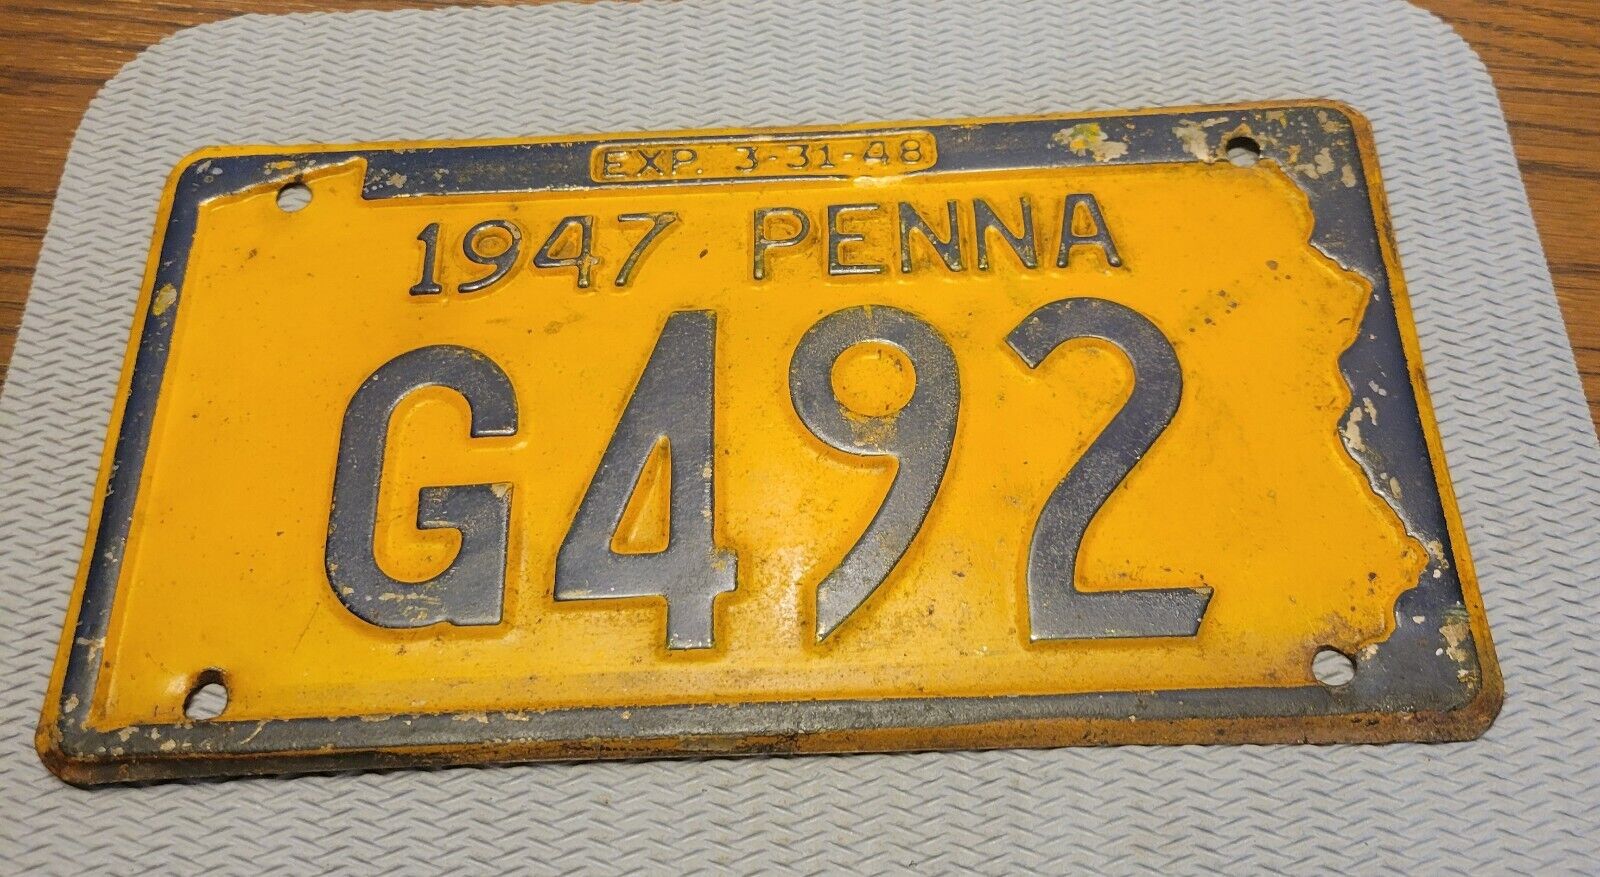 Vintage 1947 Pennsylvania License Plate, G492